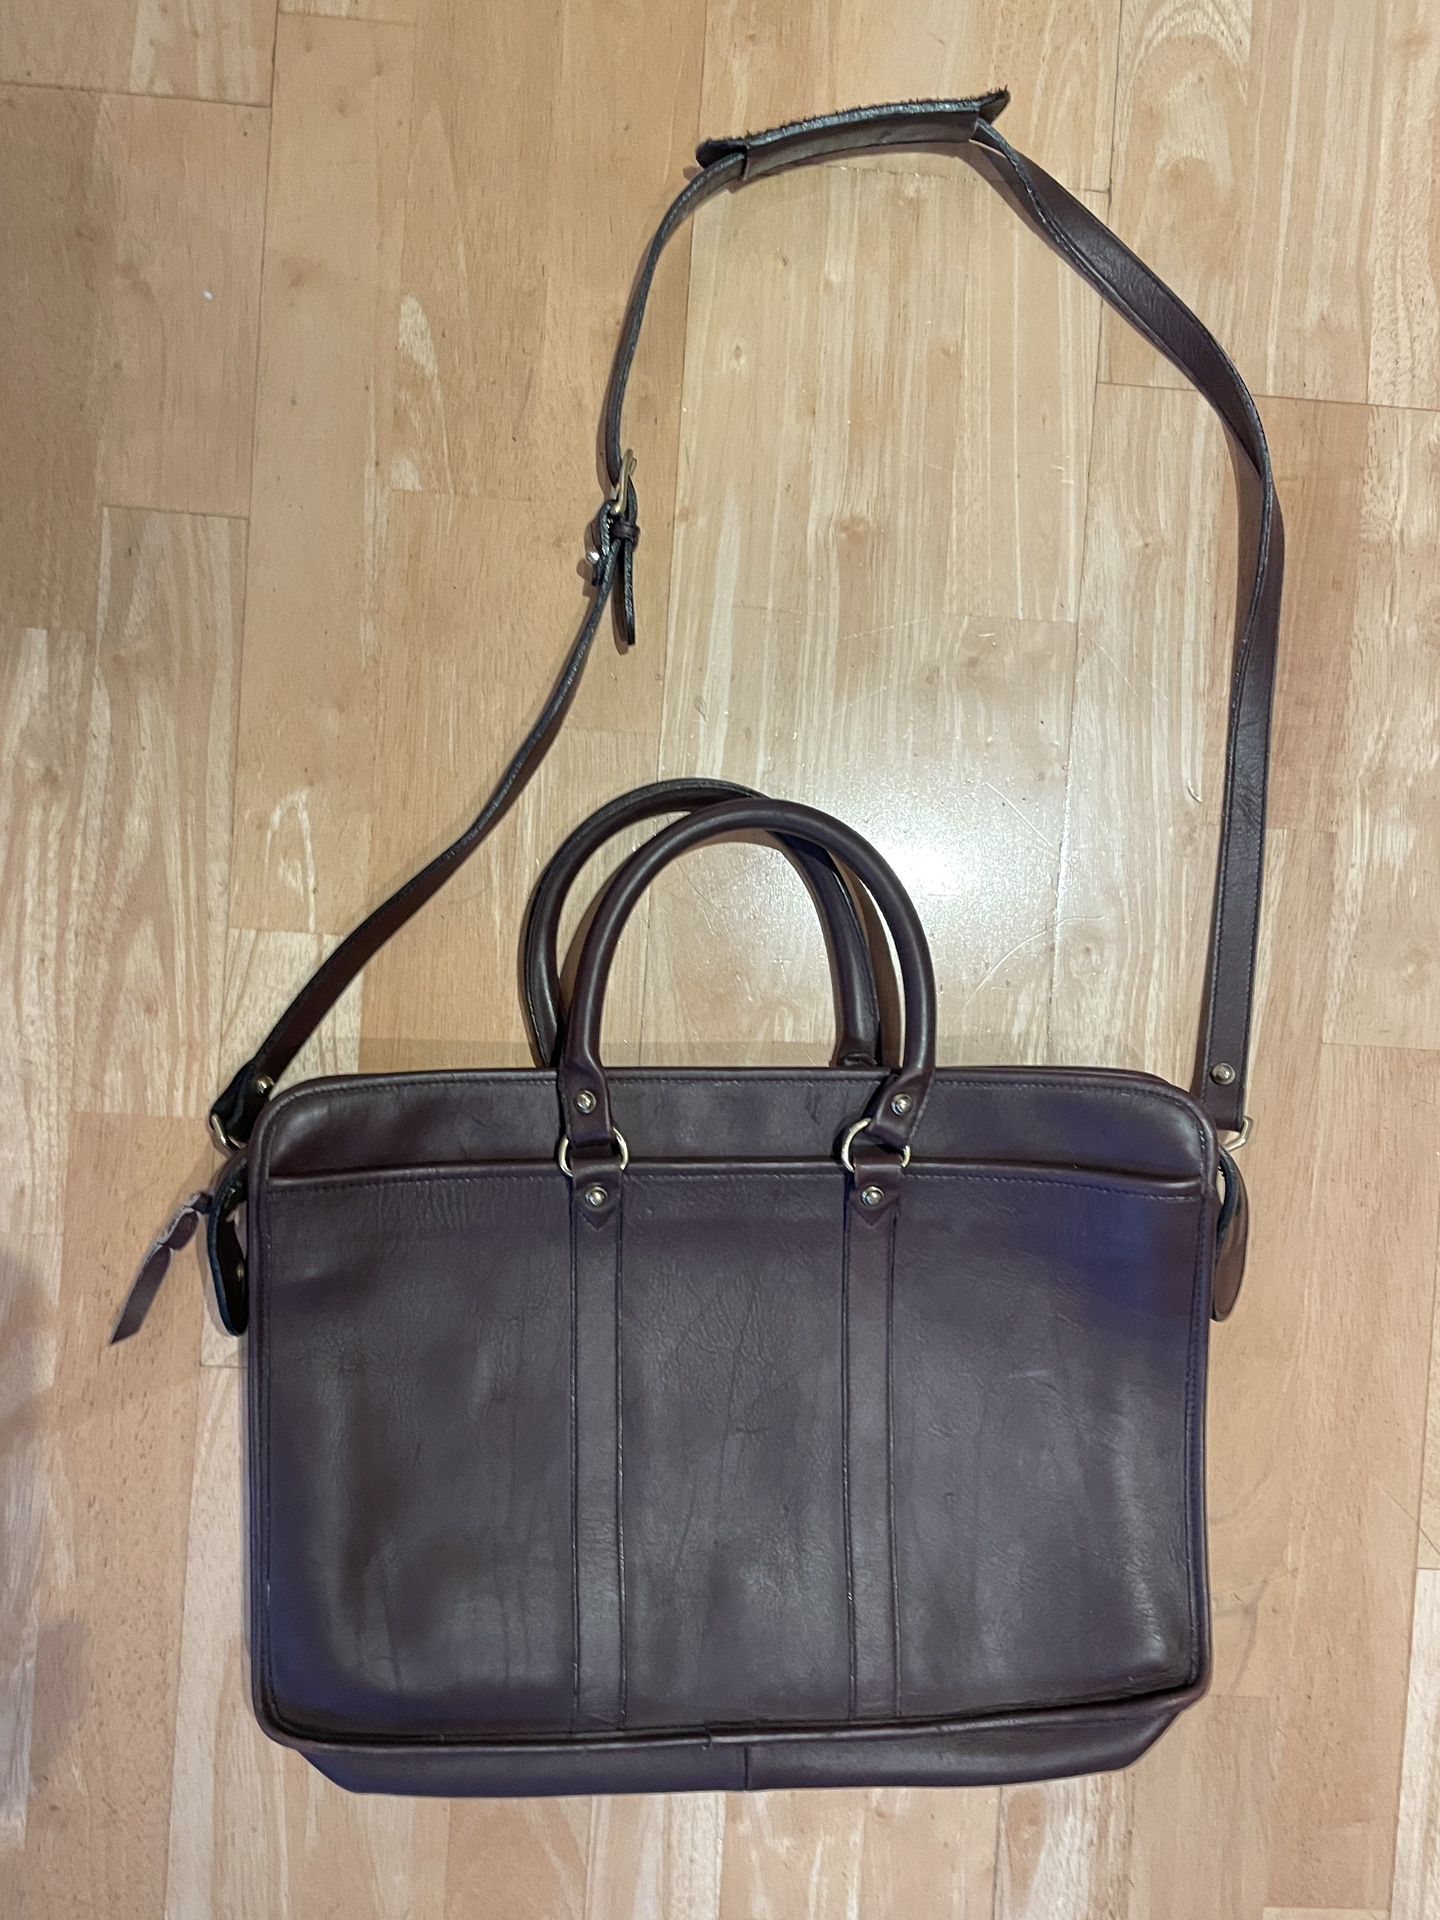 Cole Haan soft satchel legal bag heavy leather